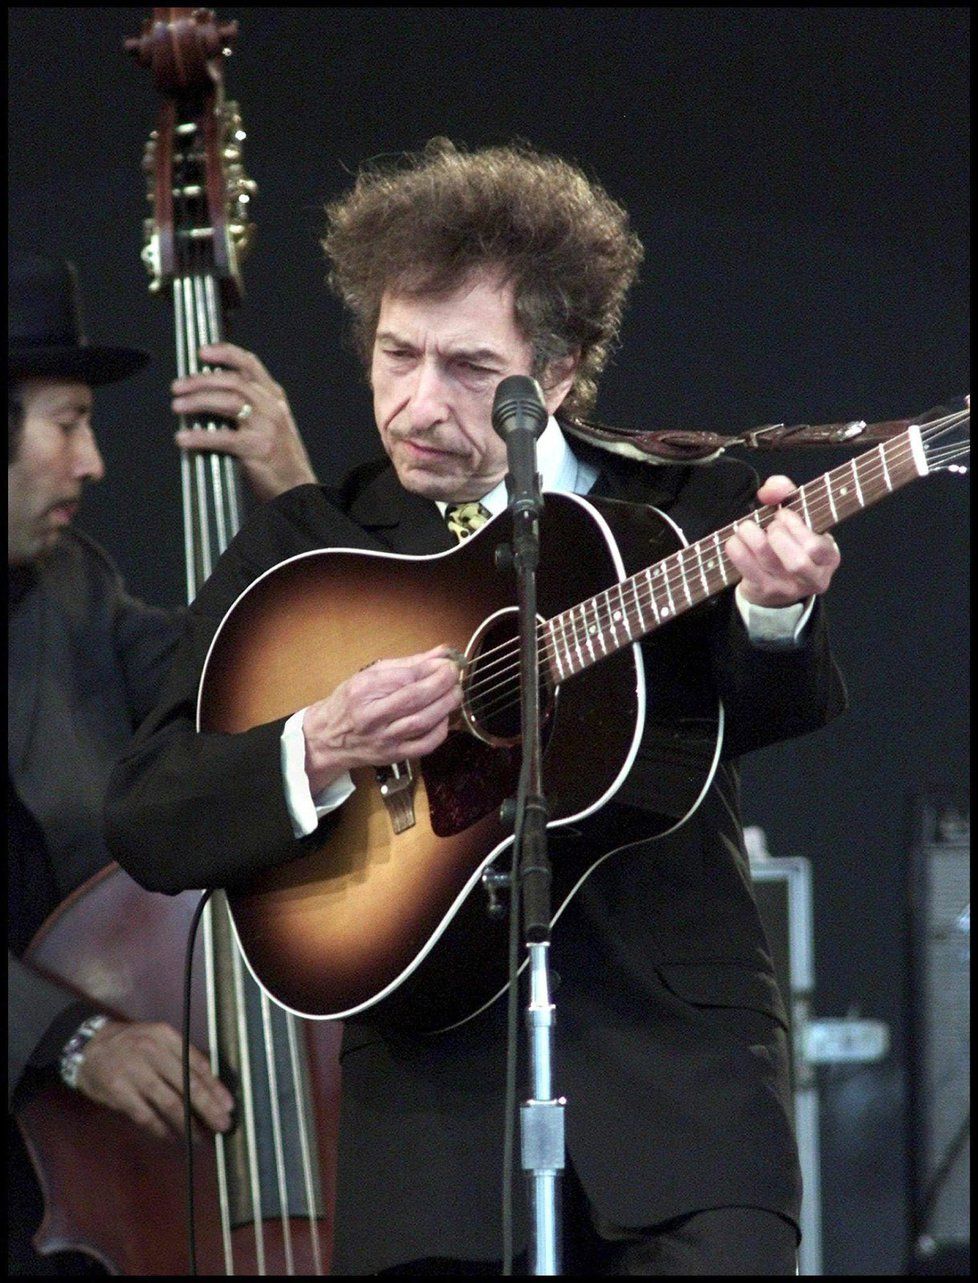 Nobelovu cenu za literaturu získal Bob Dylan